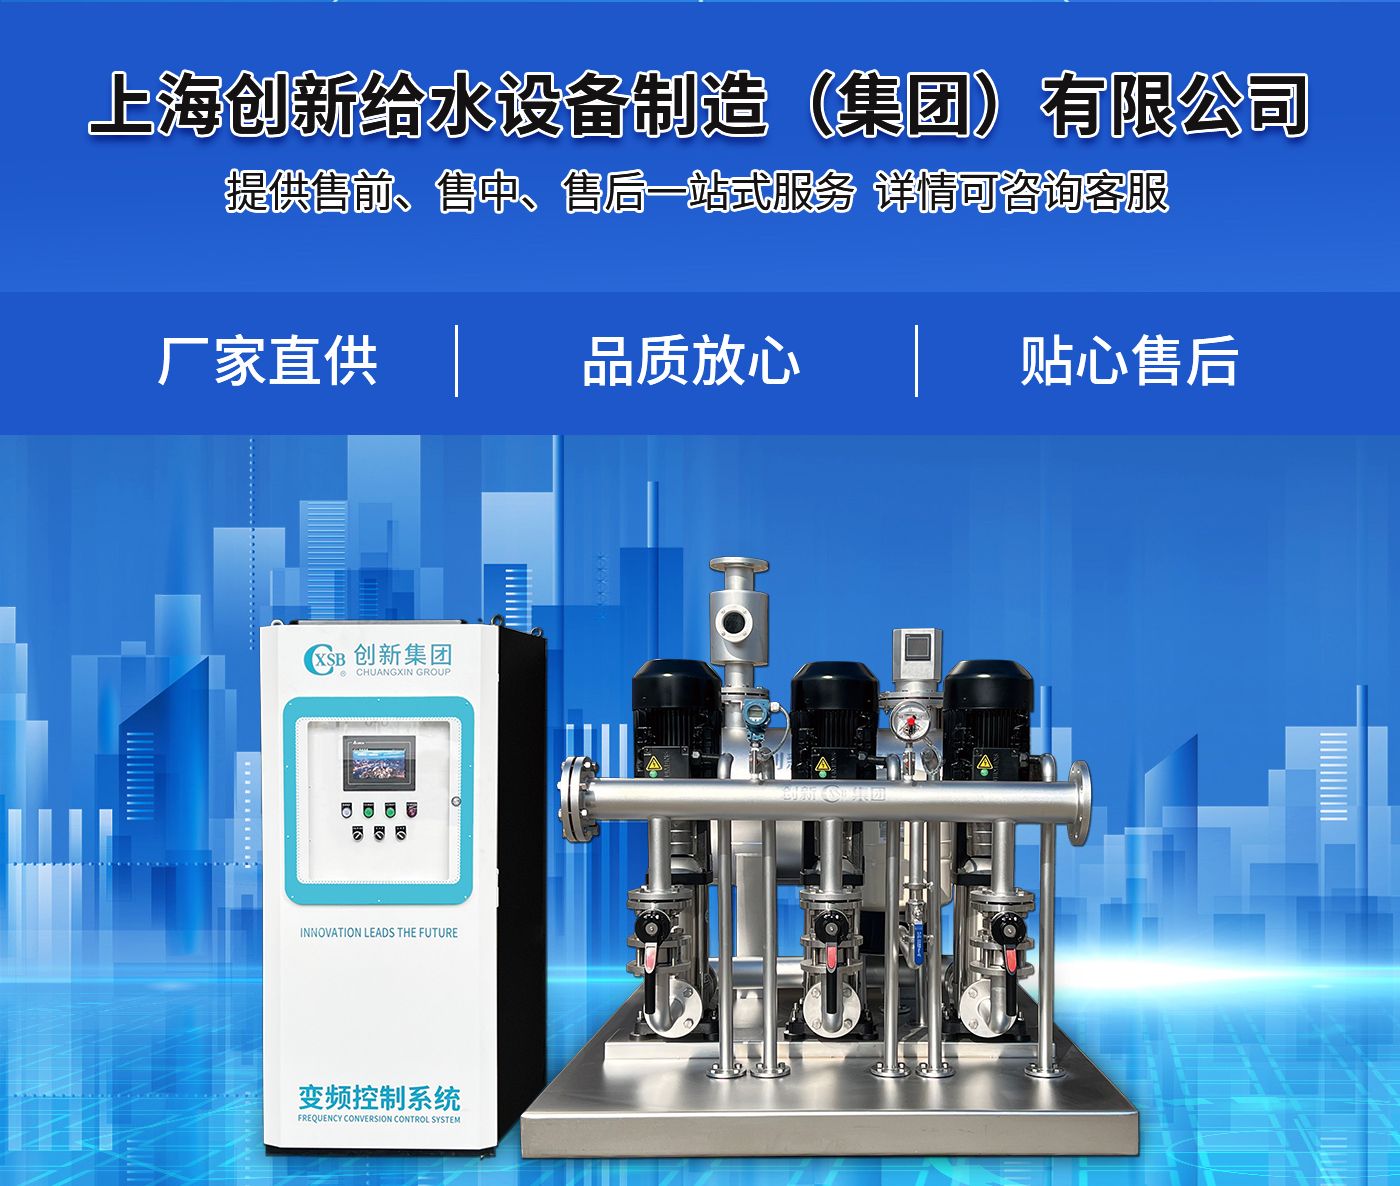 CXWG-I系列管网叠压无负压供水设备-上海创新给水集团